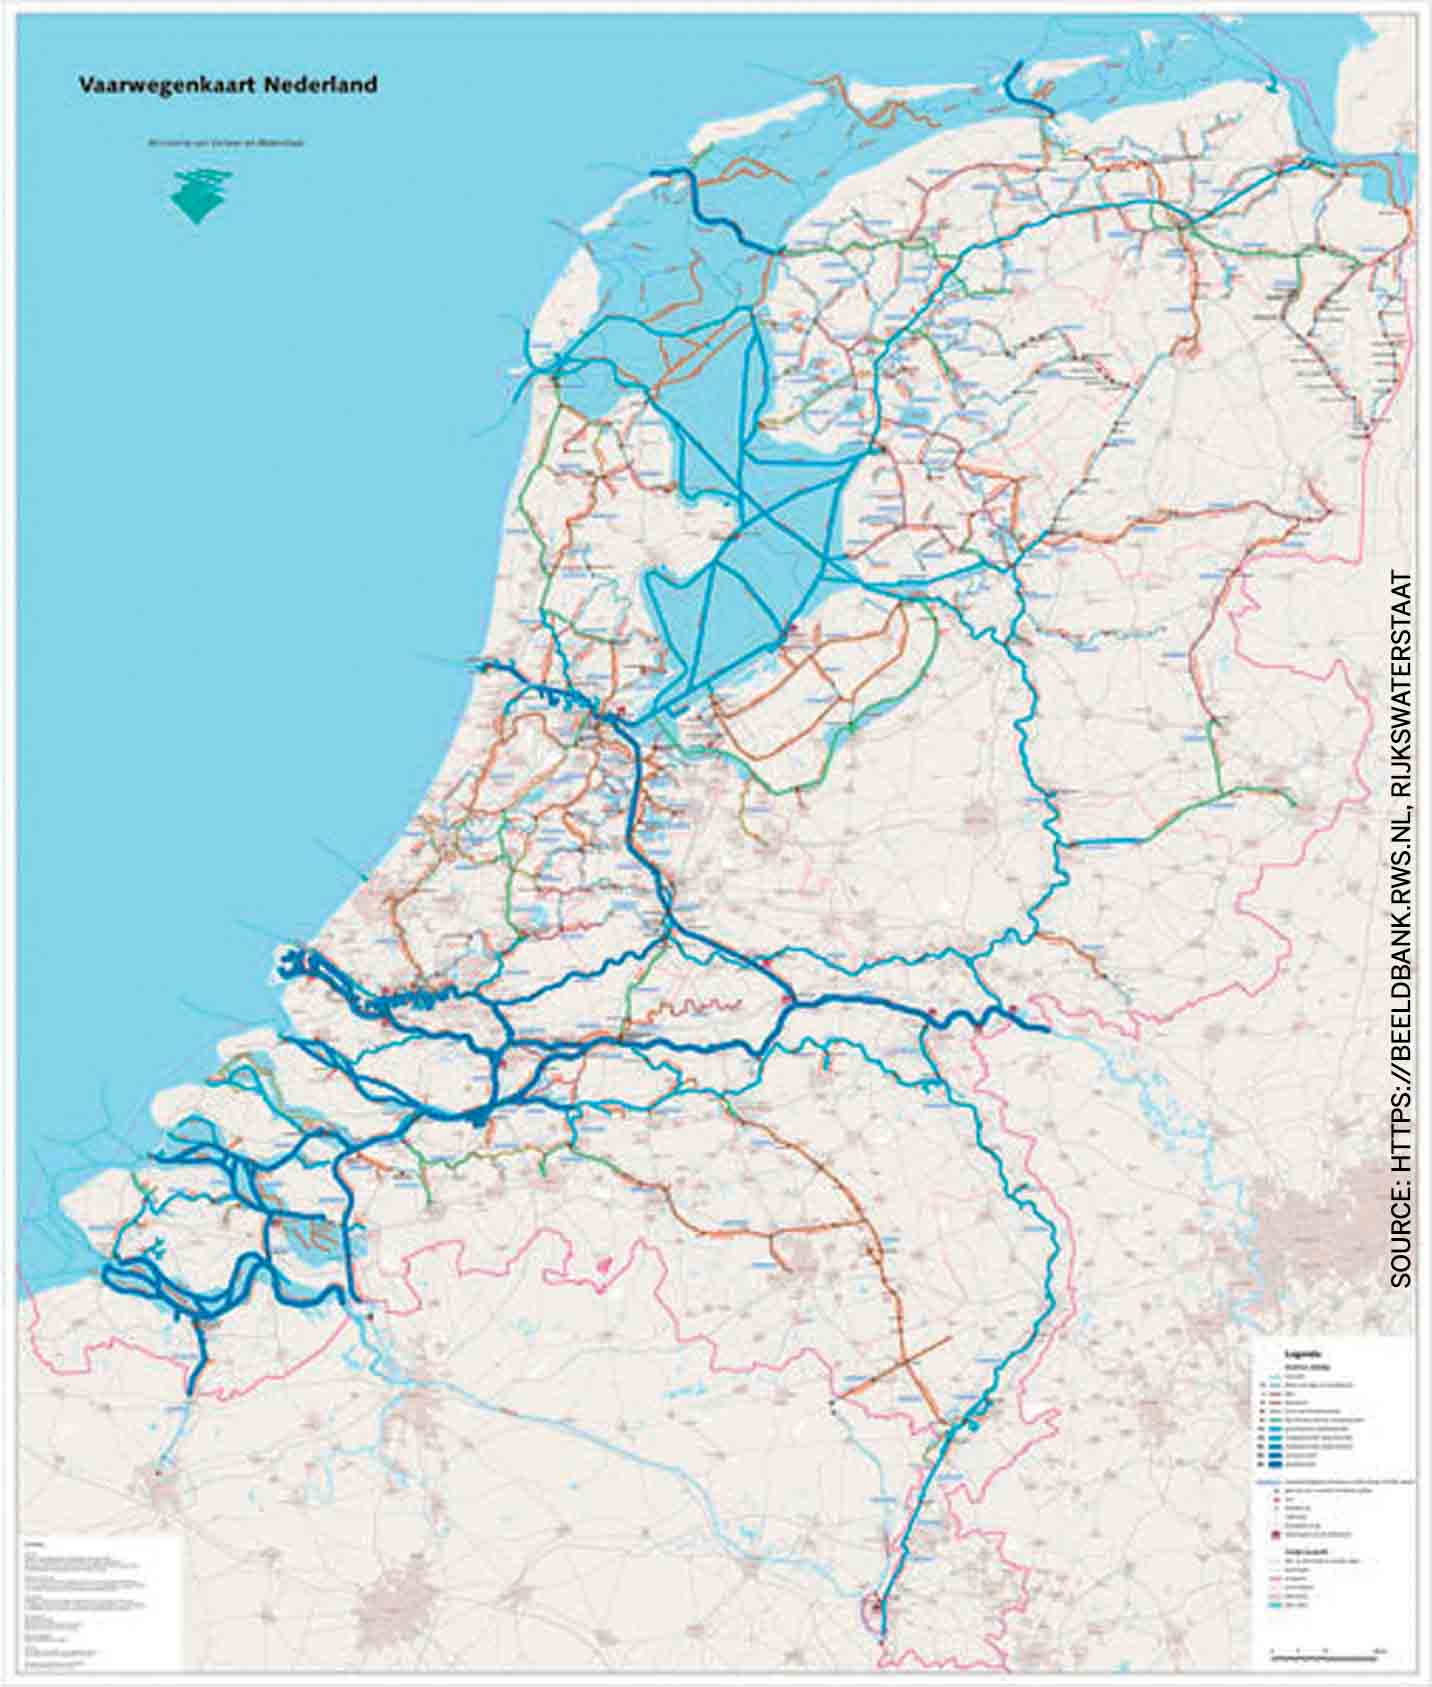 water-management-map-waterways-netherlands-today